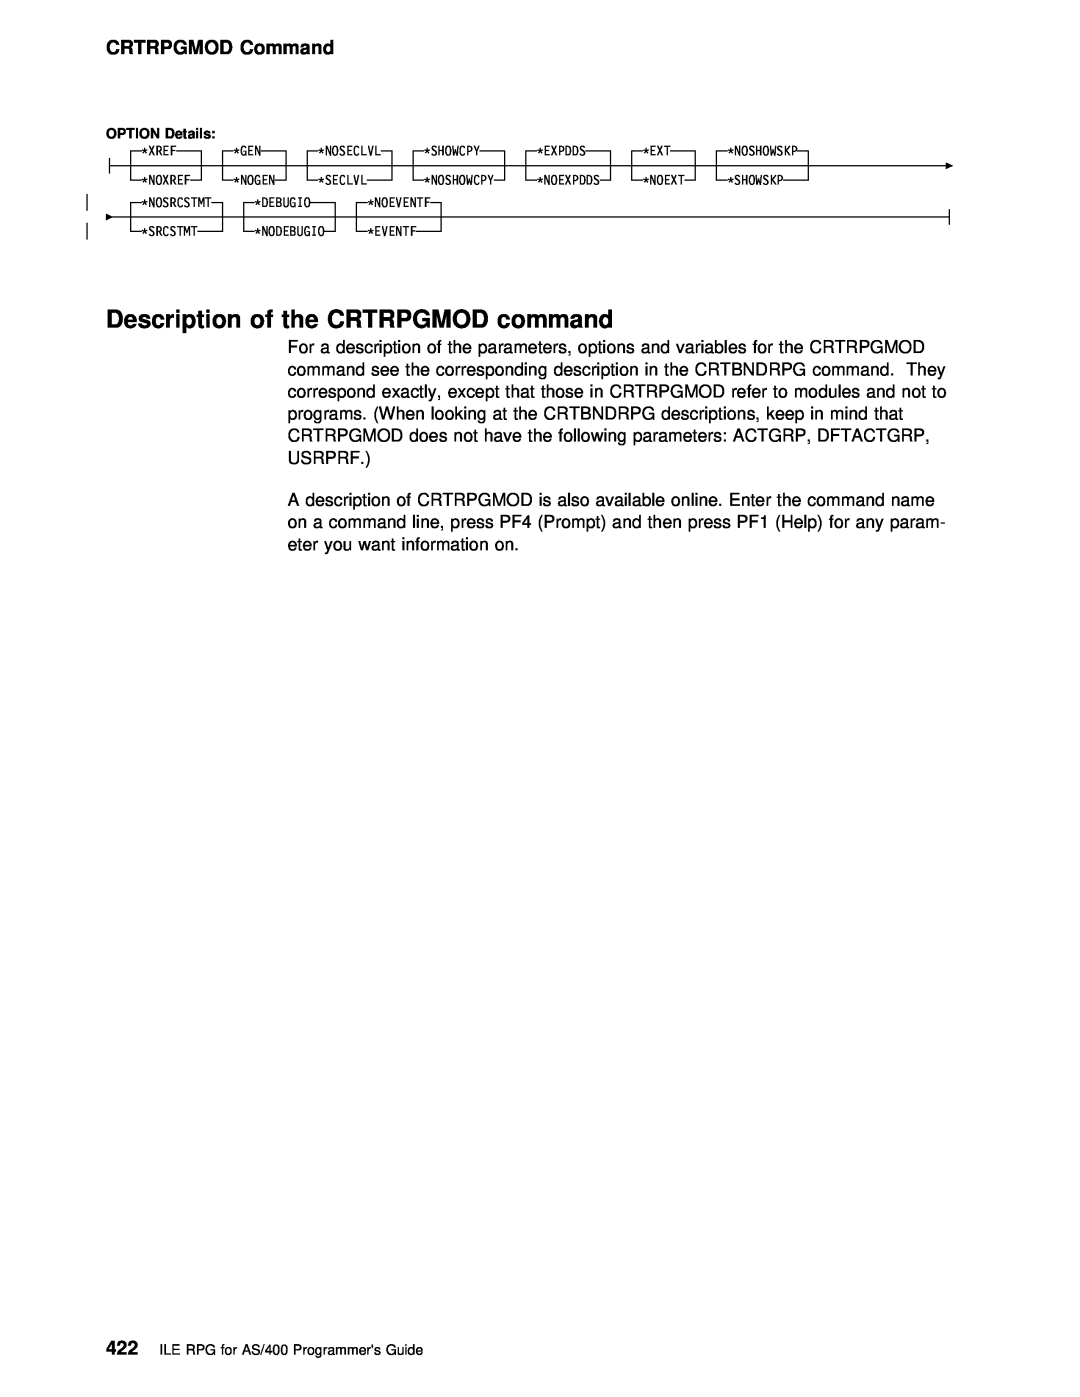 IBM manual Description of the CRTRPGMOD command, CRTRPGMOD Command, of CRTRPGMOD, ILE RPG for AS/400 Programmers Guide 